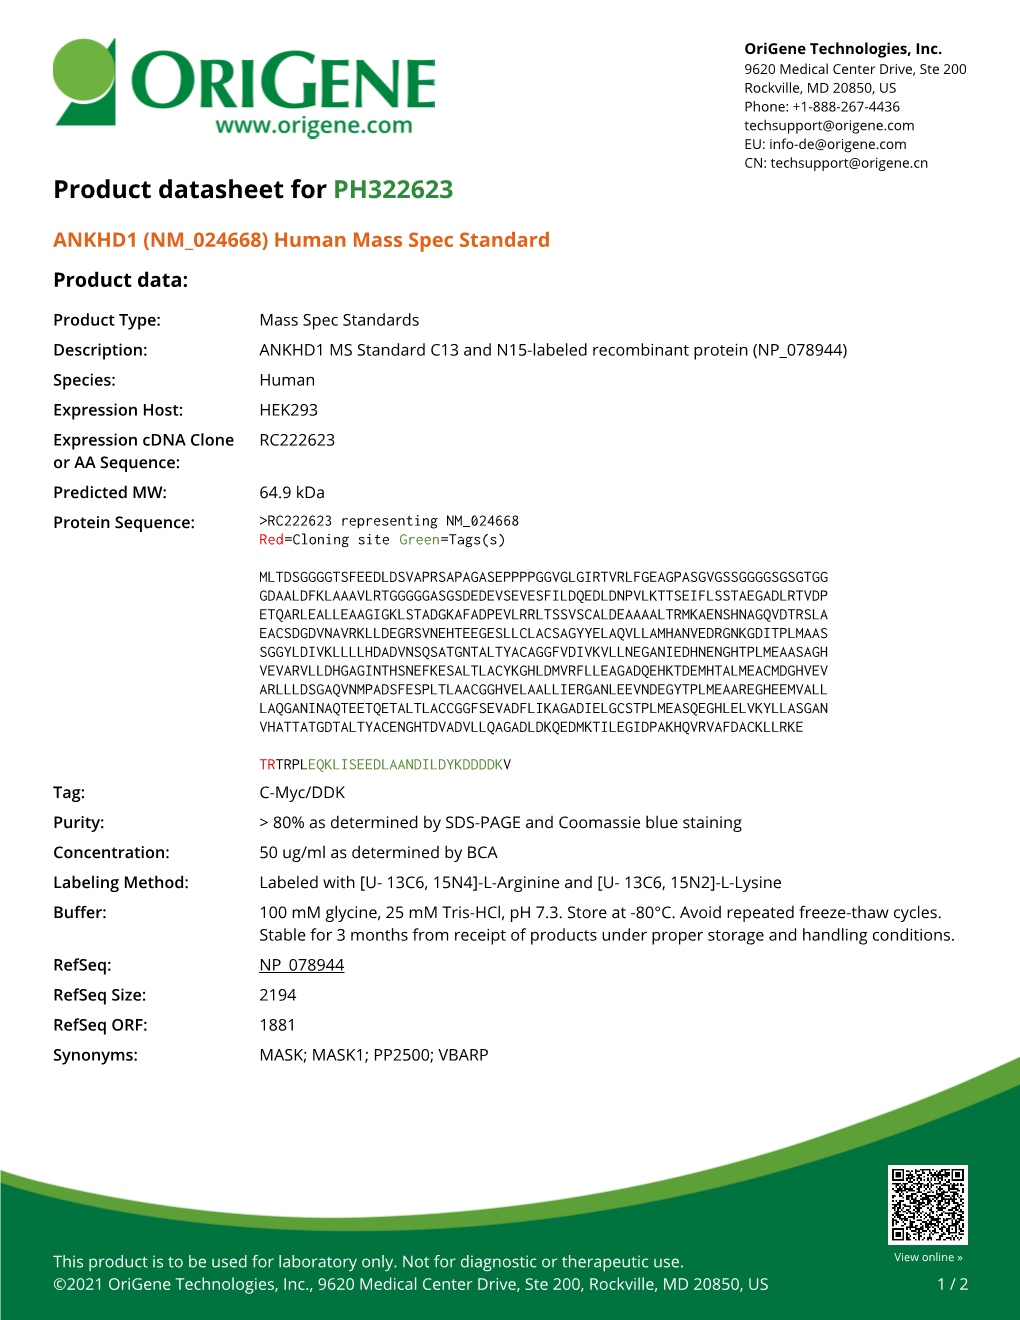 ANKHD1 (NM 024668) Human Mass Spec Standard Product Data